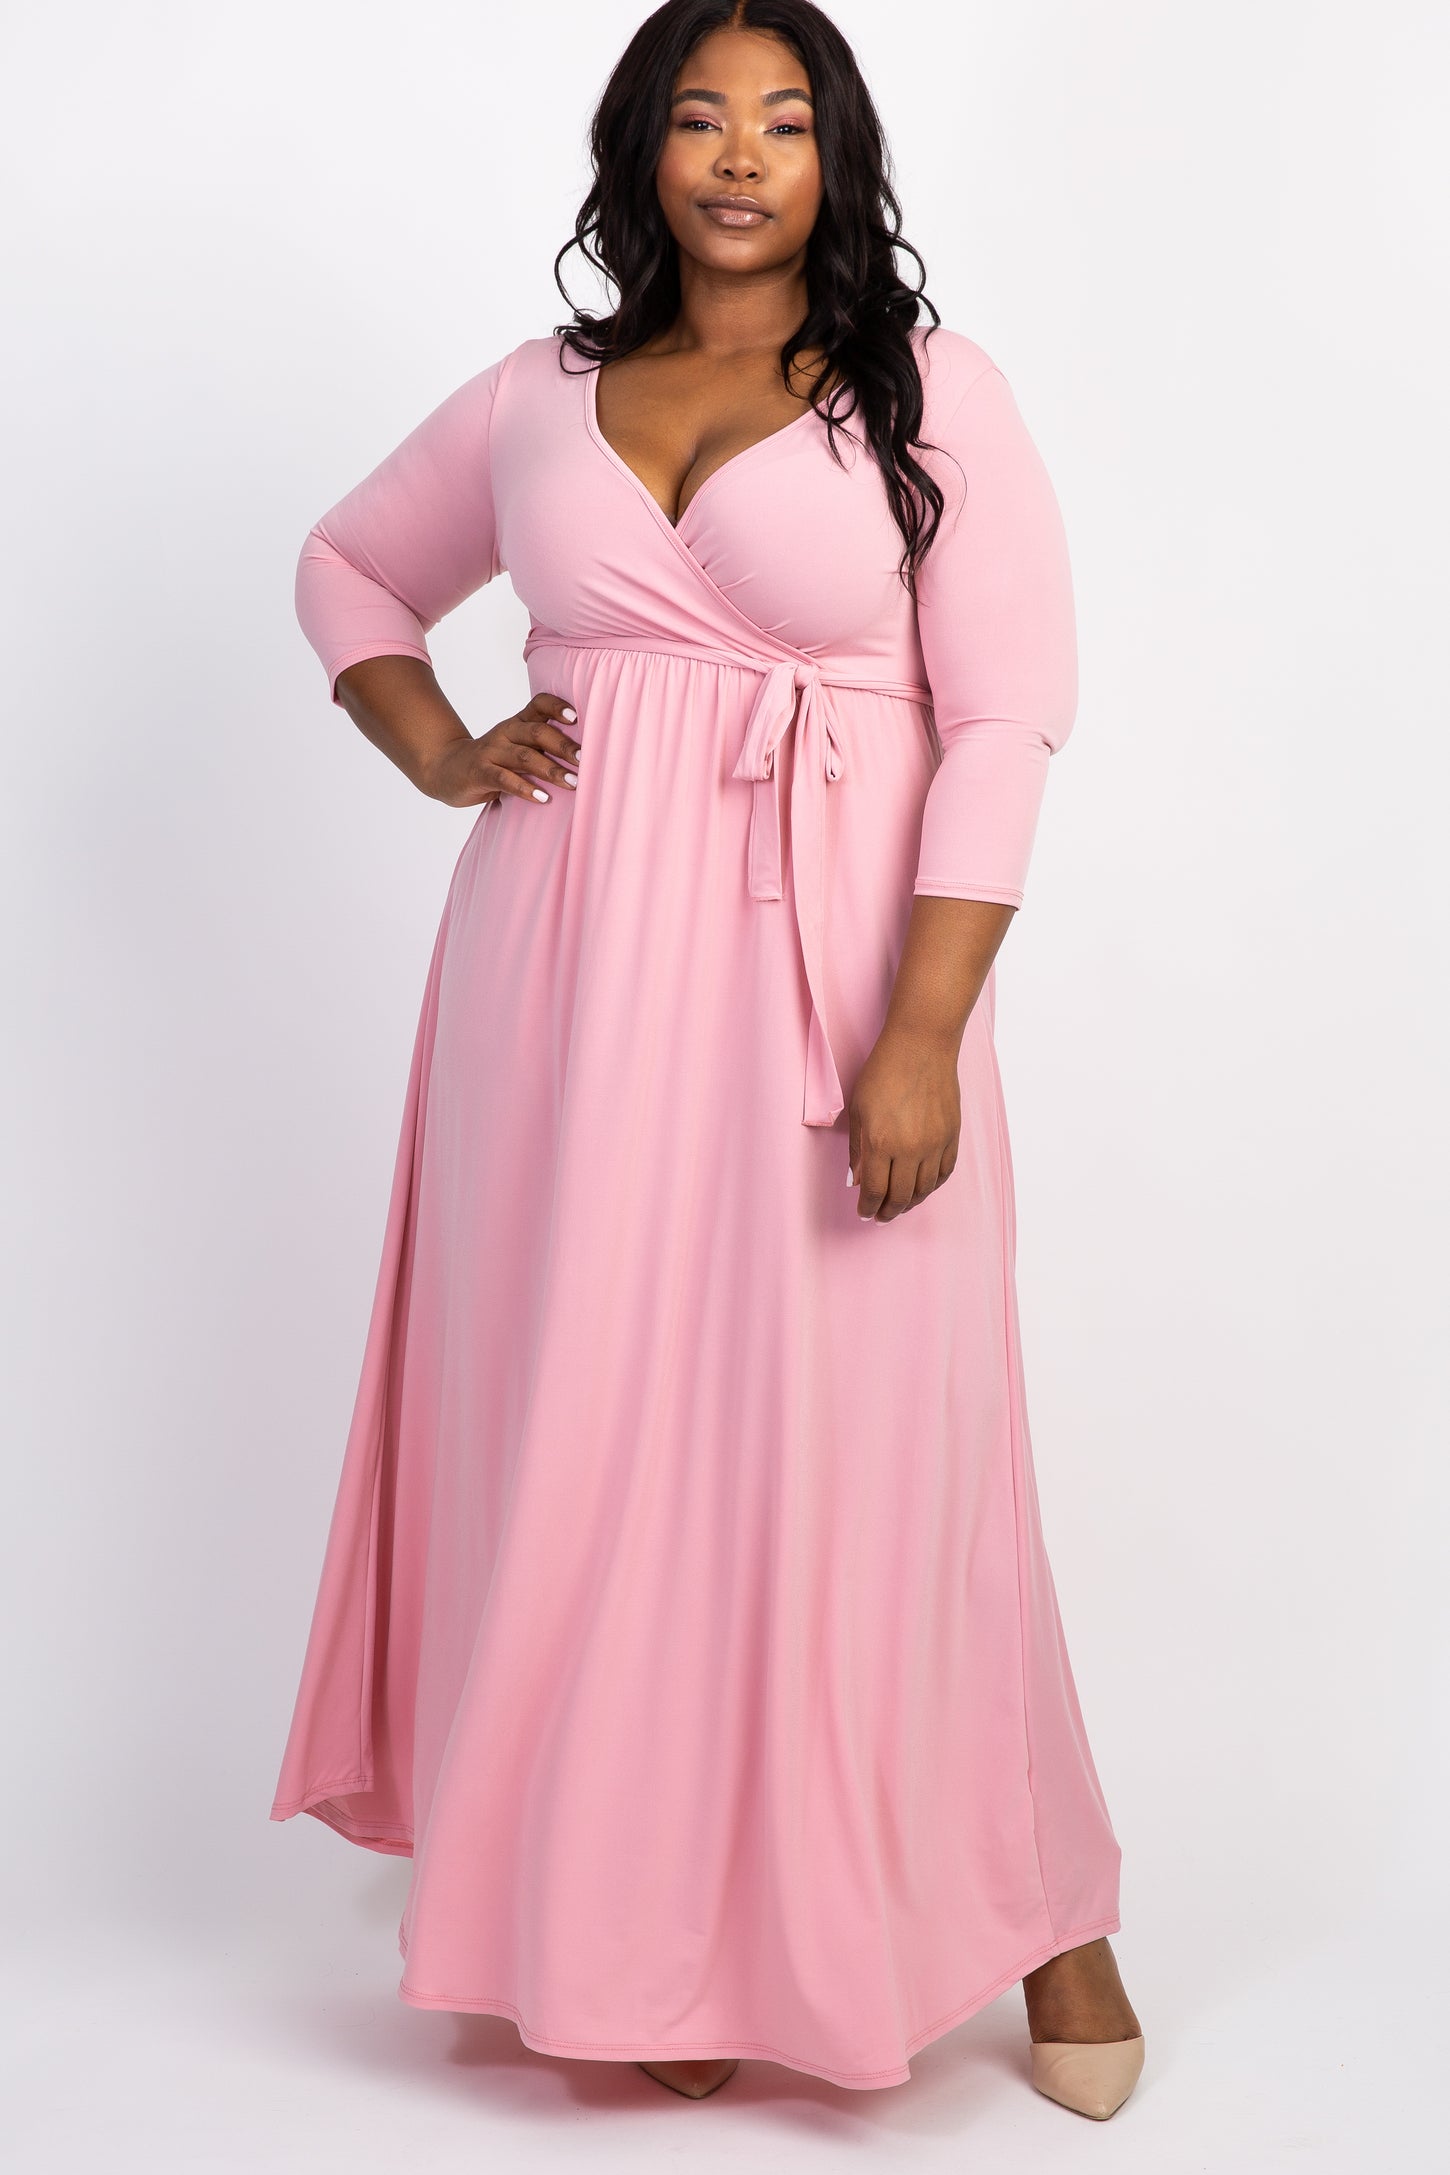 Pinkblush Puff Sleeve Maxi Dresses for Women